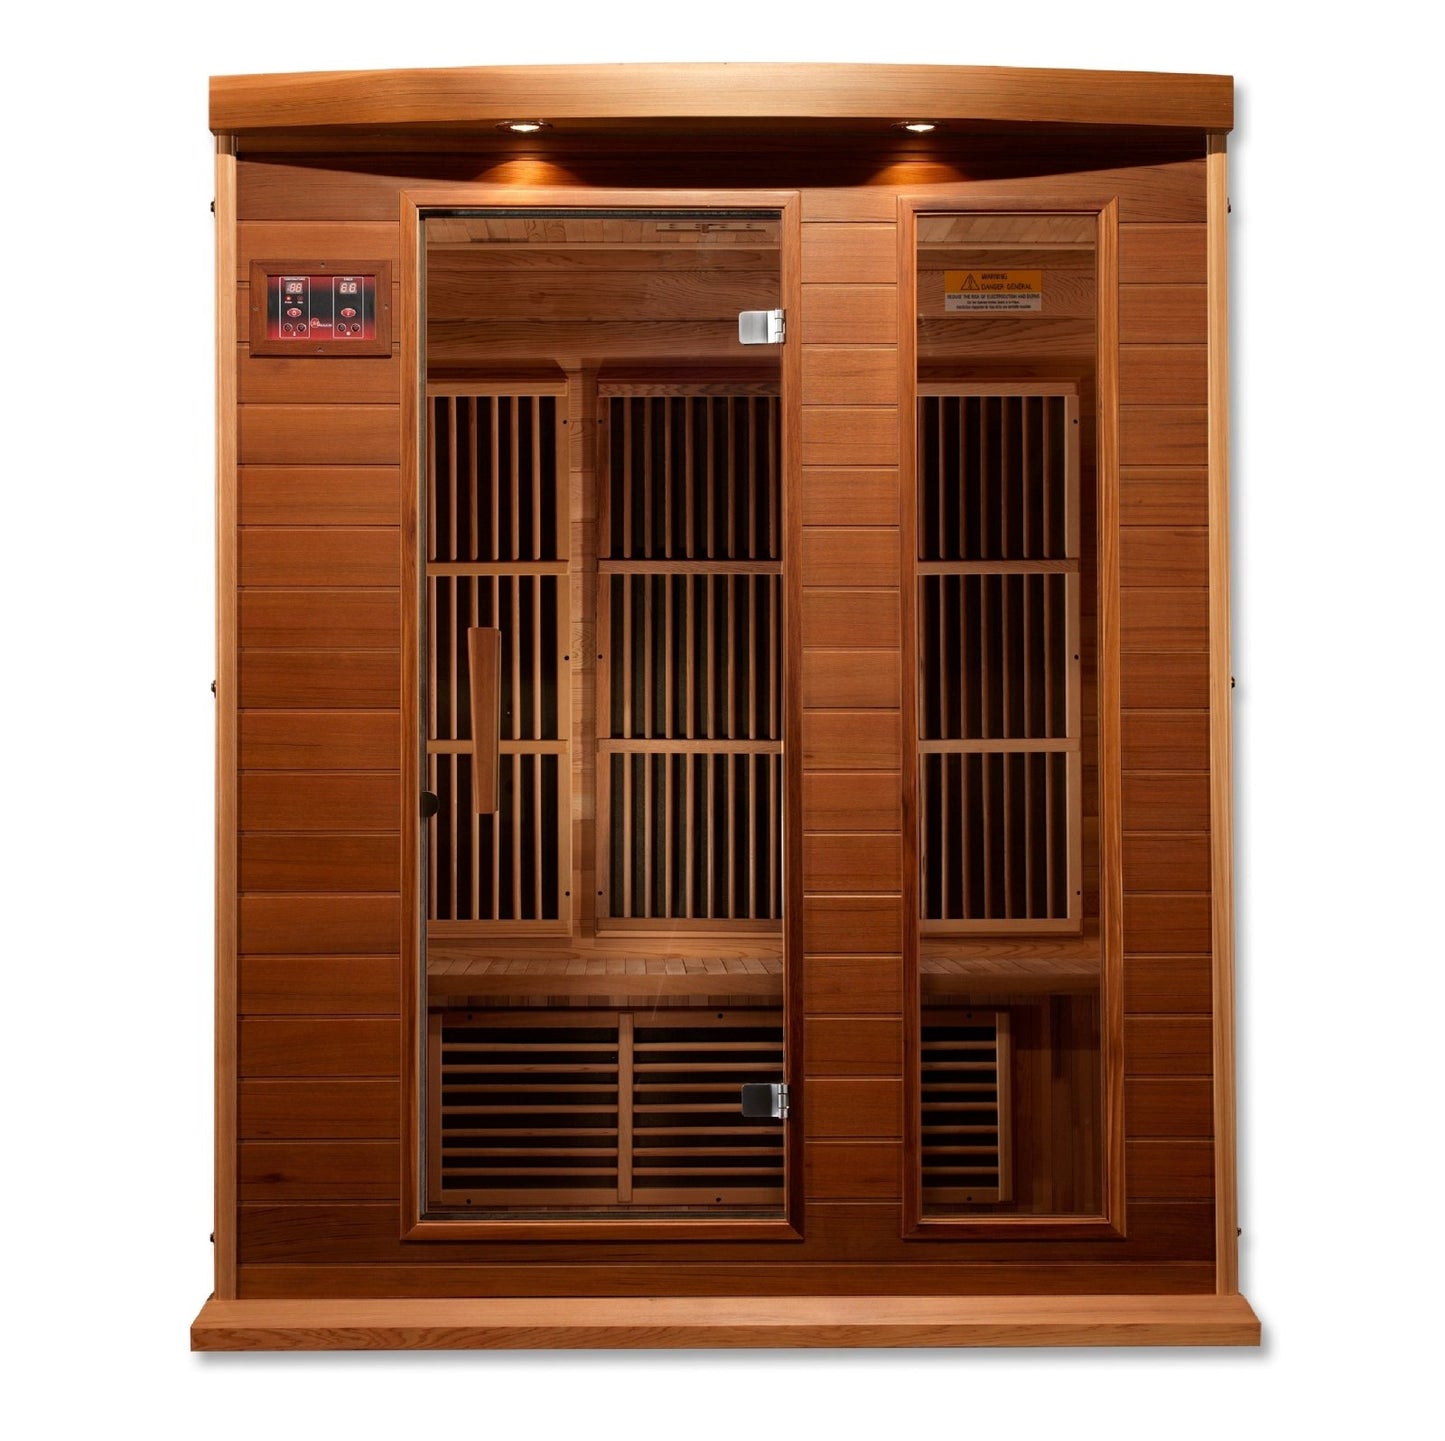 Golden Design Low EMF 3-Person Maxxus FAR Infrared Sauna with Red Cedar Wood | Model: MX-K306-01 CED - MX-K306-01 CED